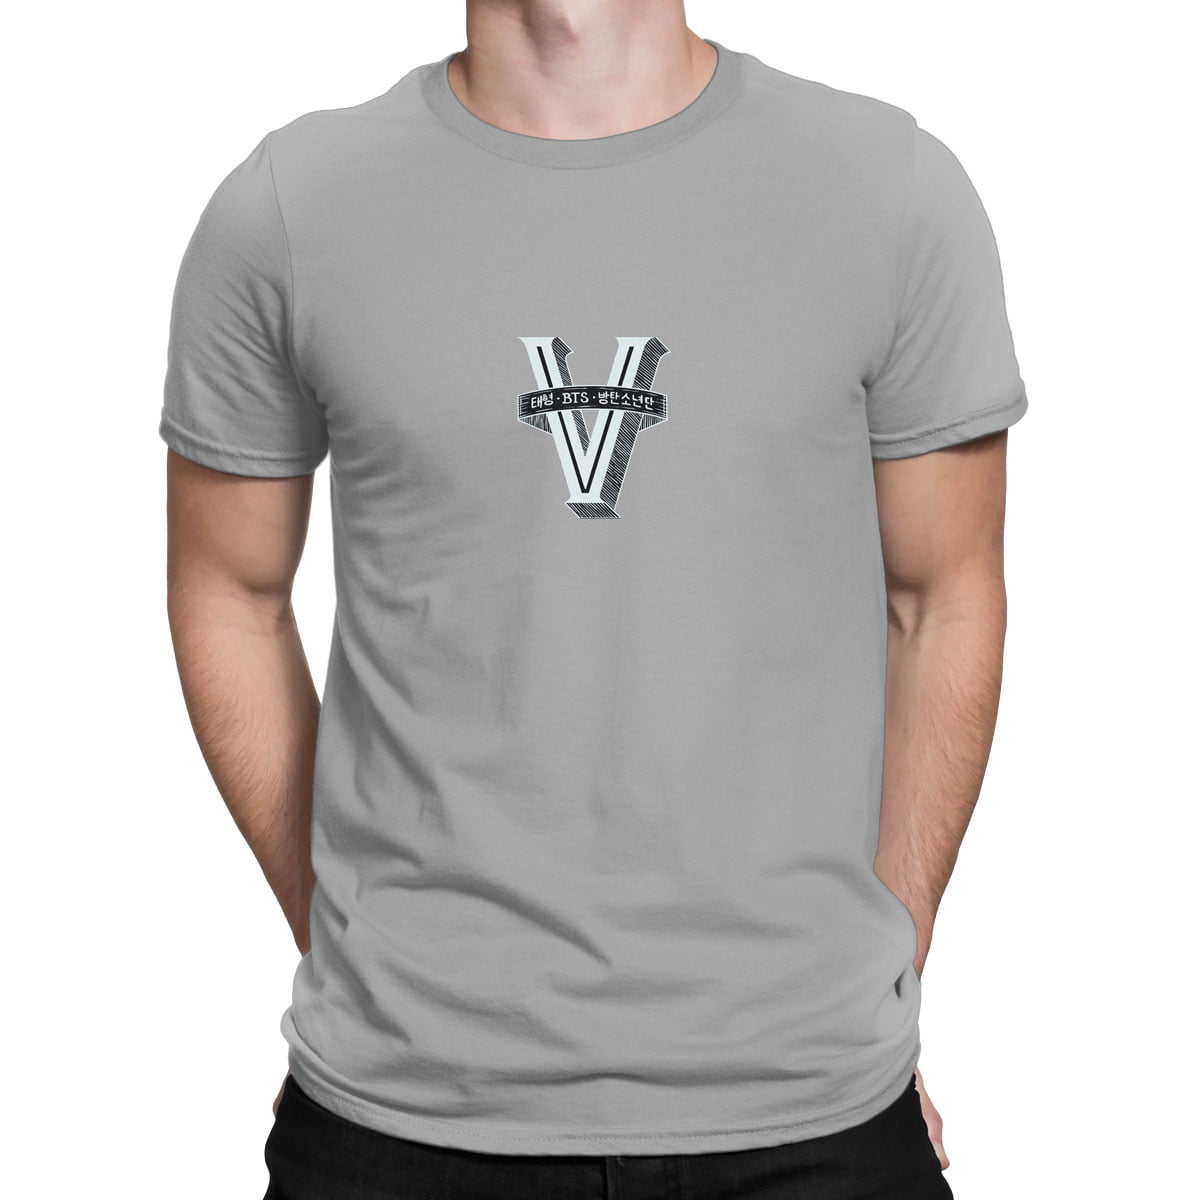 Bts v logo erkek tisort g - bts logo no4 baskılı erkek t-shirt - figurex